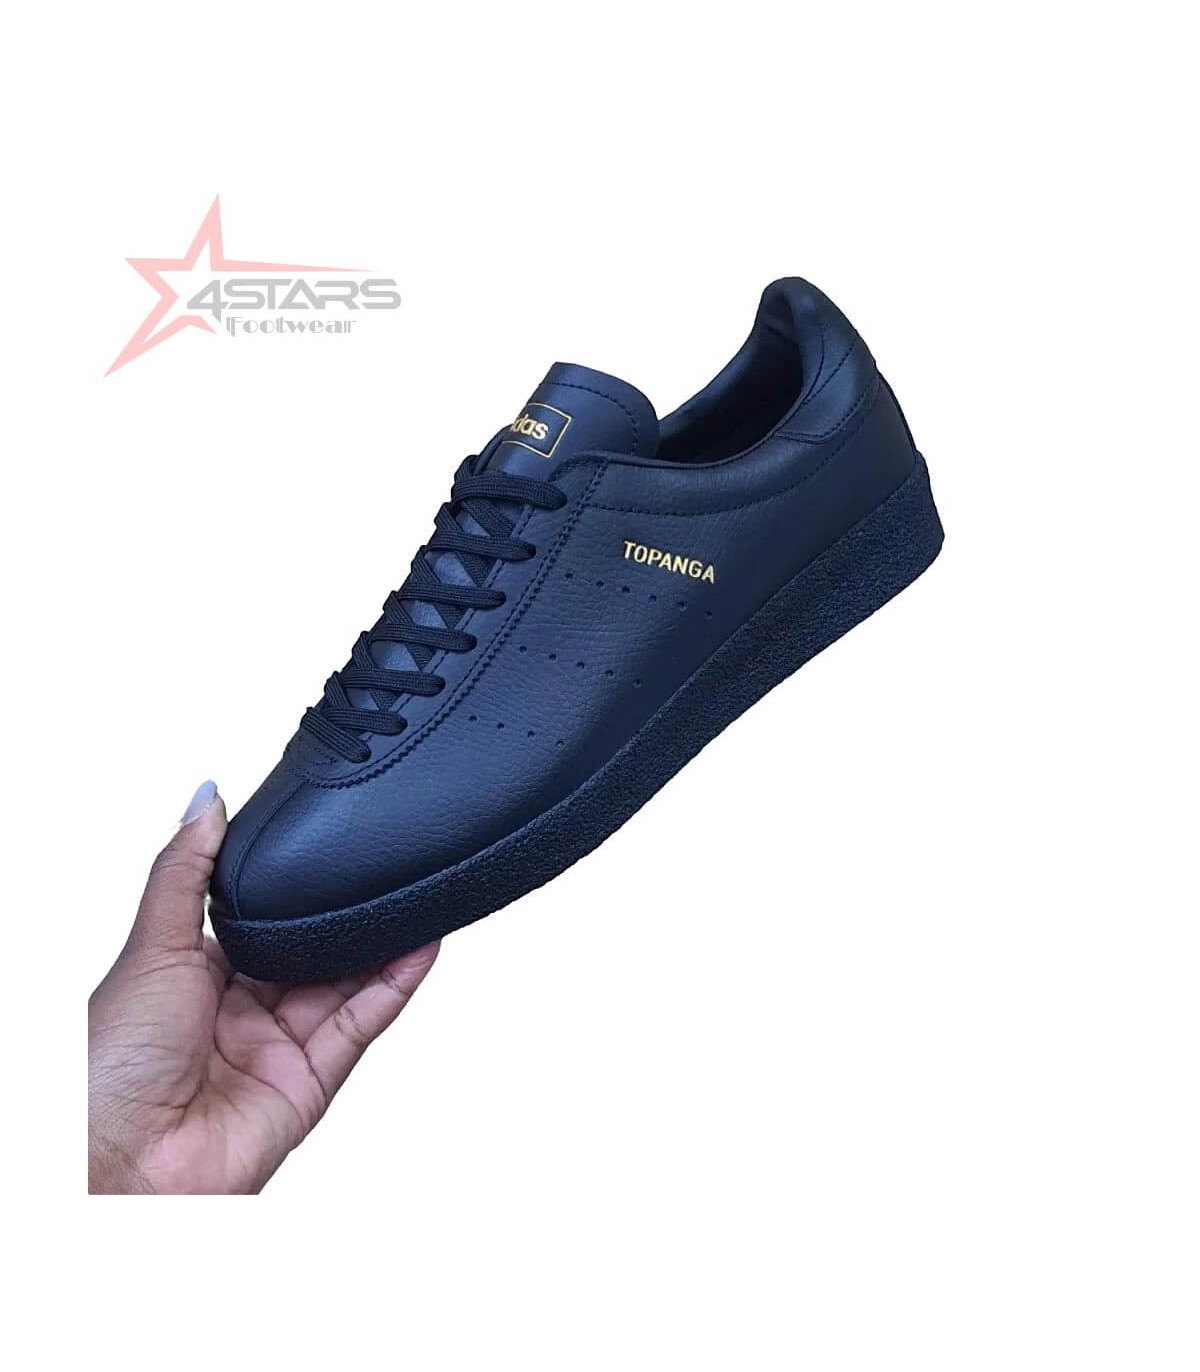 Adidas Topanga Black Leather White Sole Sneaker Shoes in Nairobi Central   Shoes Toppline Kenya  Jijicoke